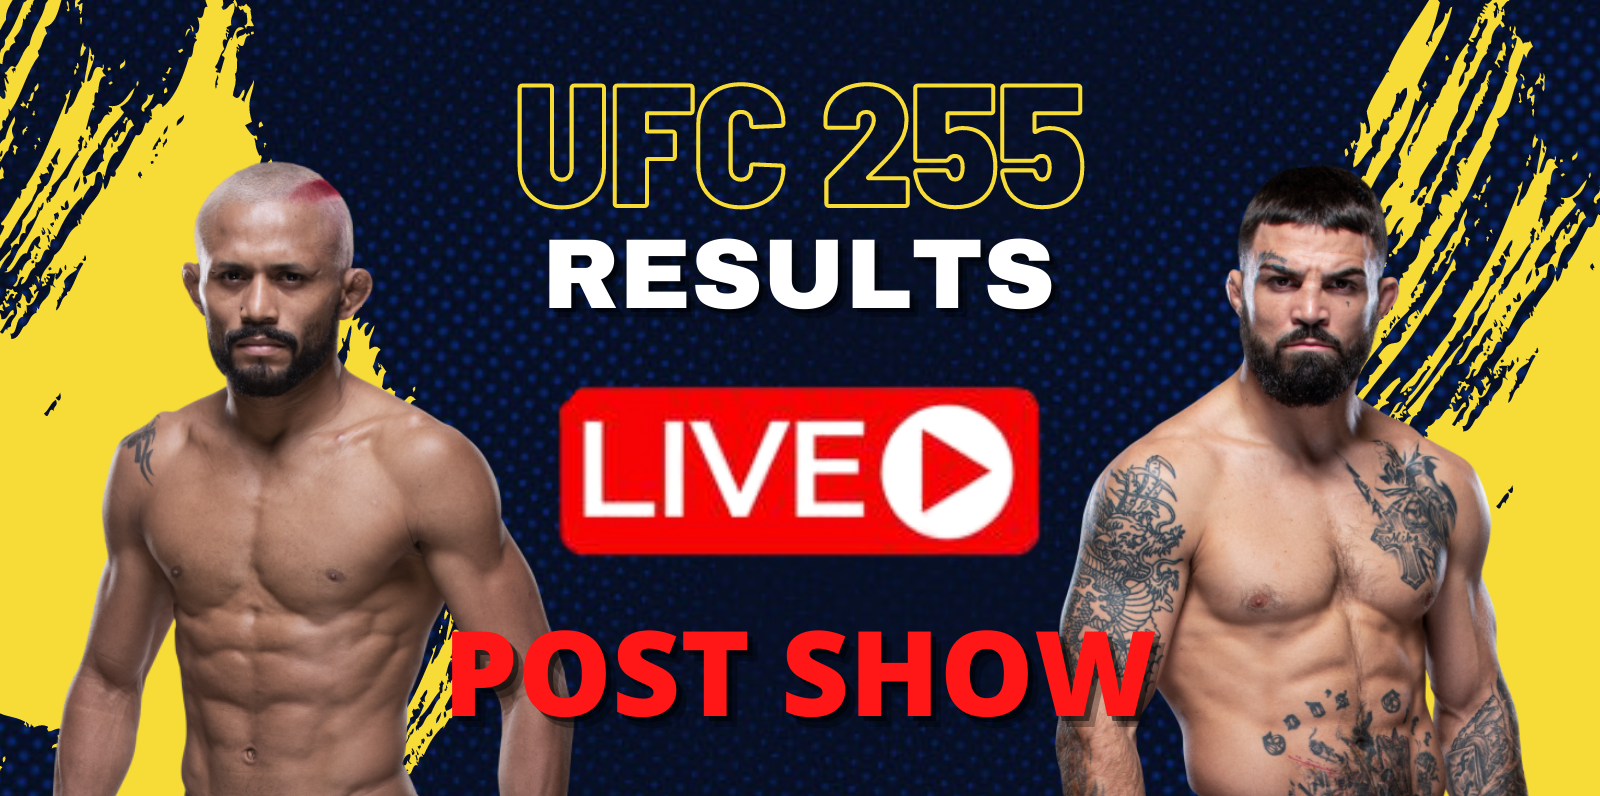 Copy Of UFC 255 RESULTS LIVE POST SHOW WEB E1606045404102 